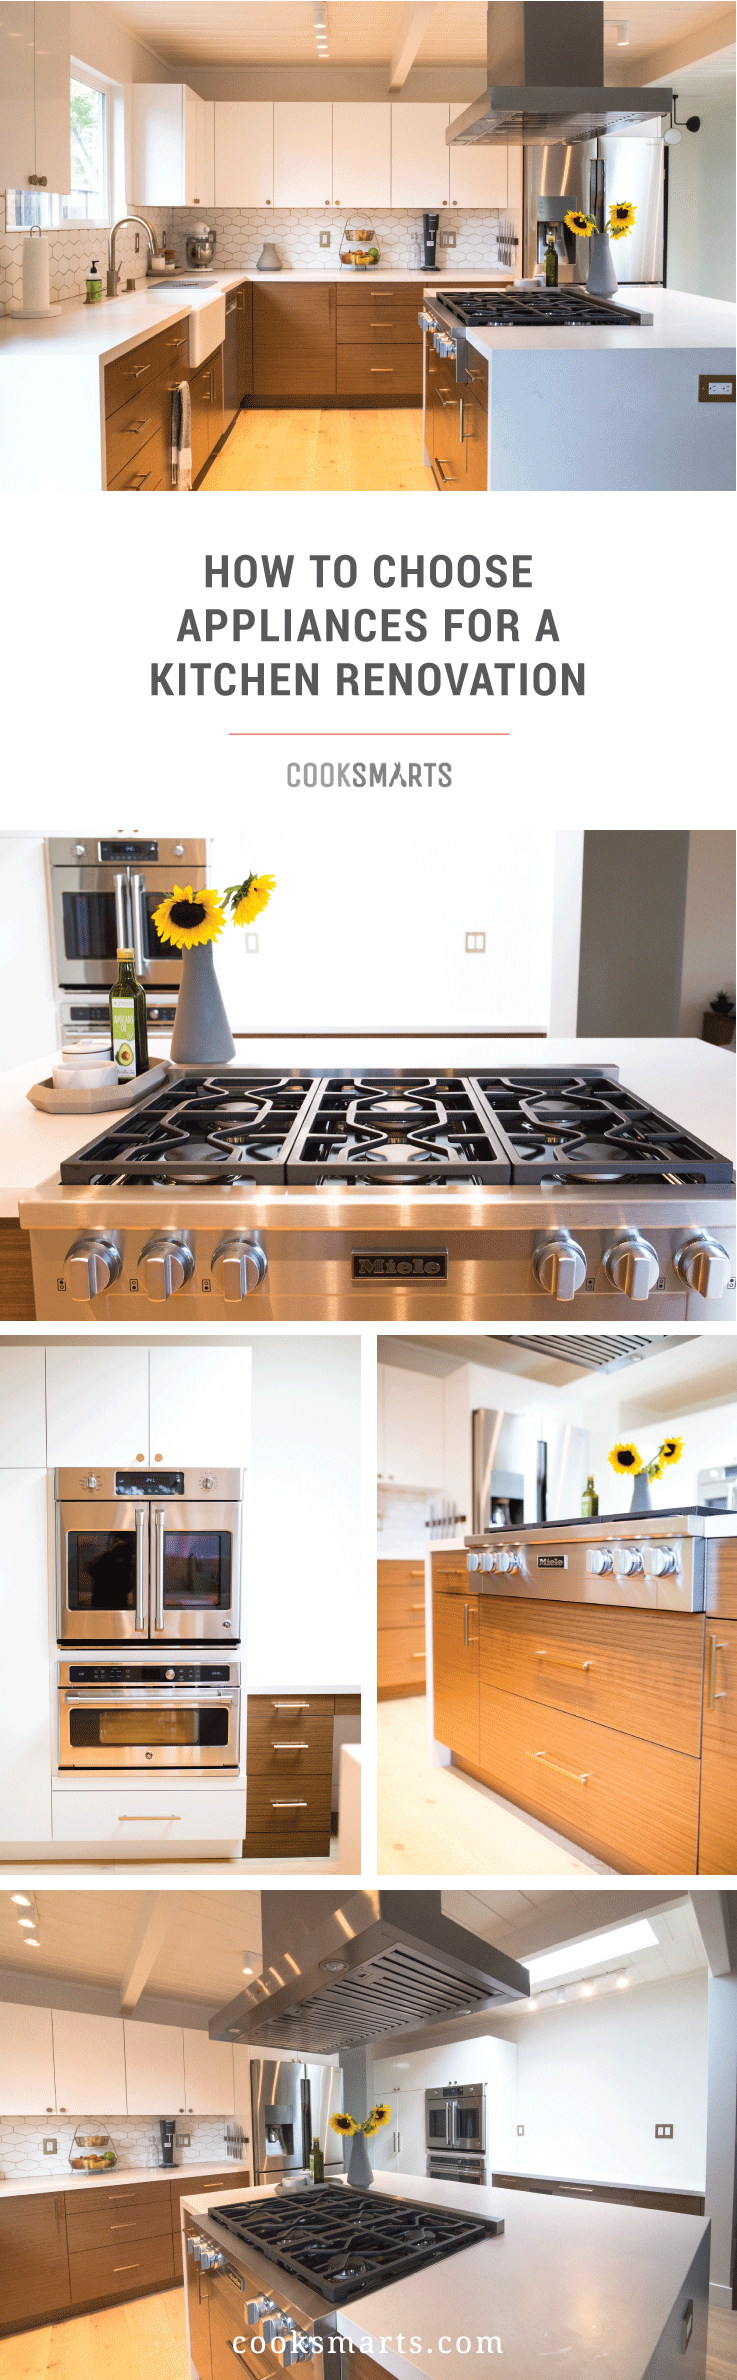 How to Choose Appliances for a Kitchen Renovation via @cooksmarts